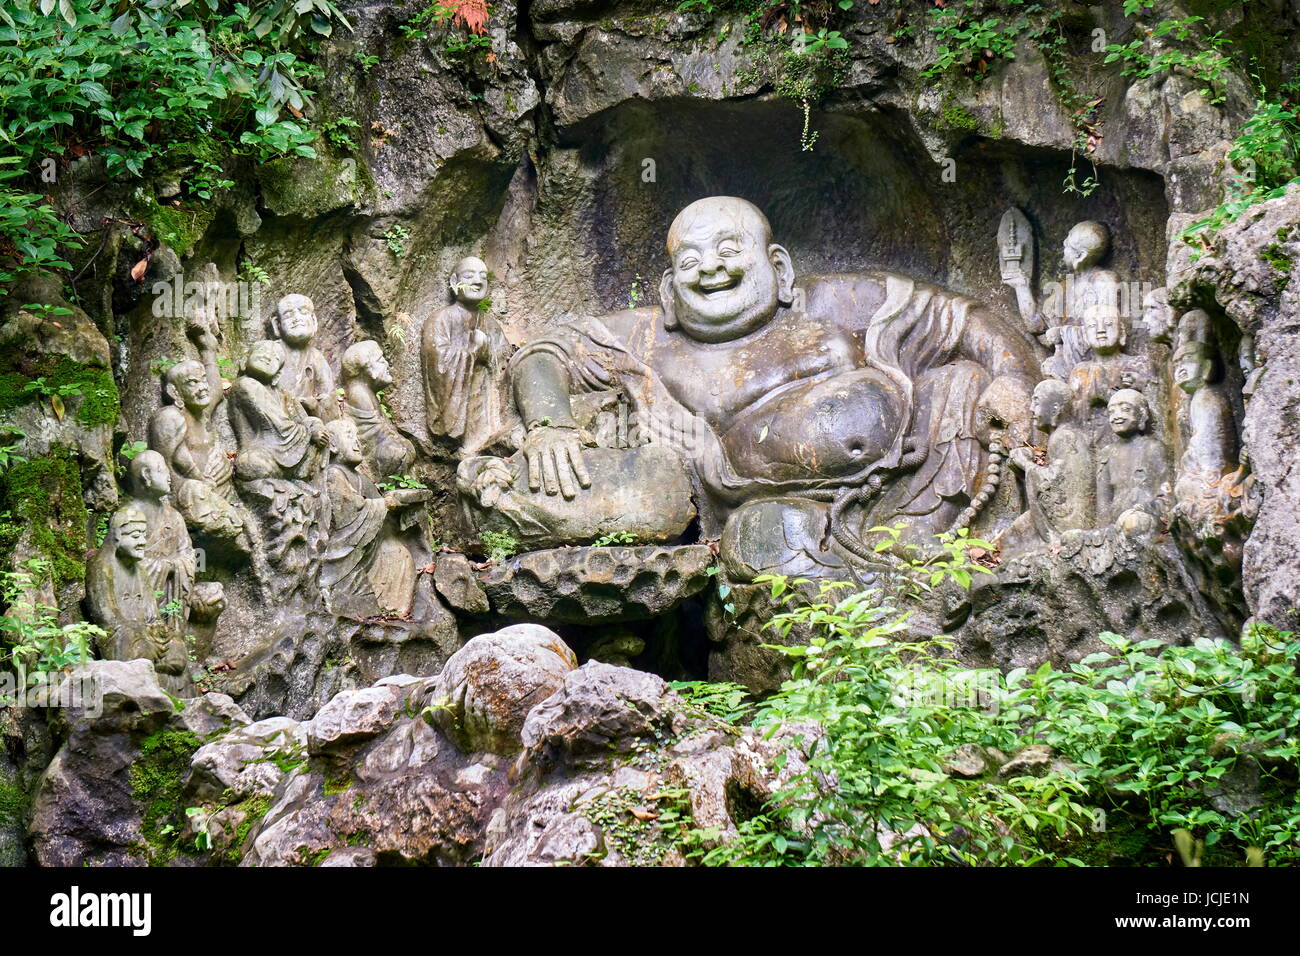 Laughing Buddha at Lingyin Temple, Hangzhou, China Stock Photo